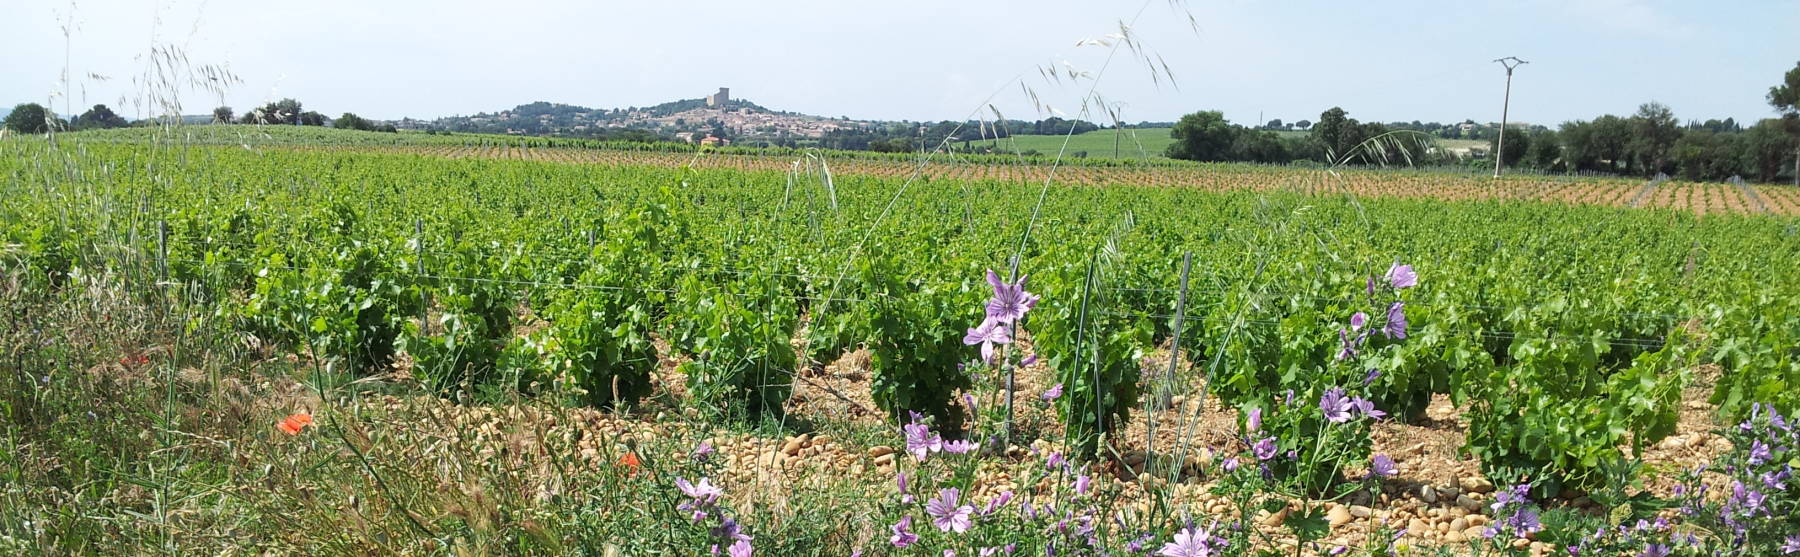 Vineyards at Châteauneuf-du-Pape